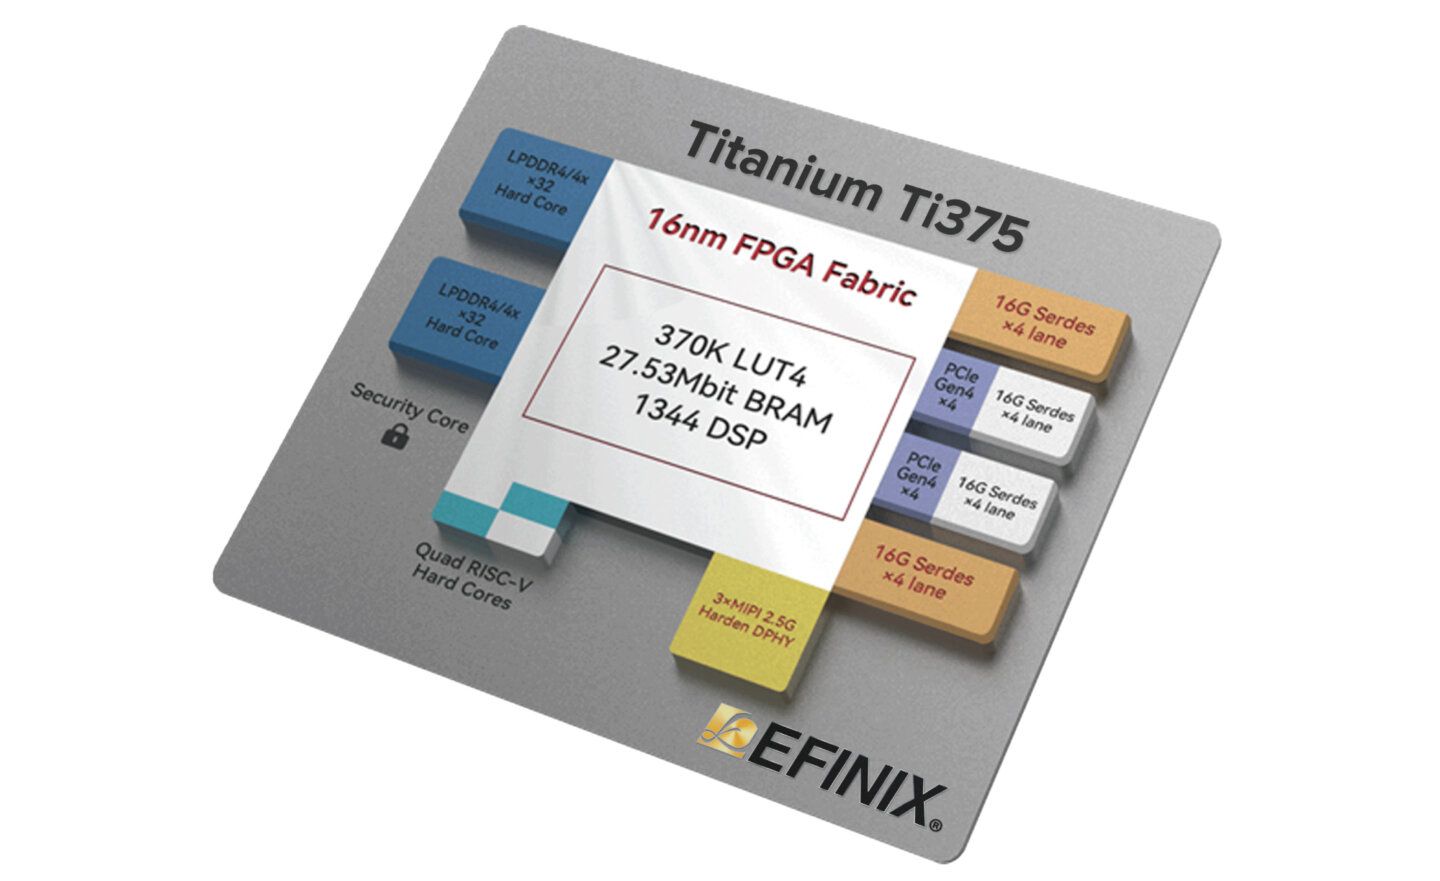  Efinix 開發 Titanium Ti375 樣品，為主流邊緣智慧解提供創新